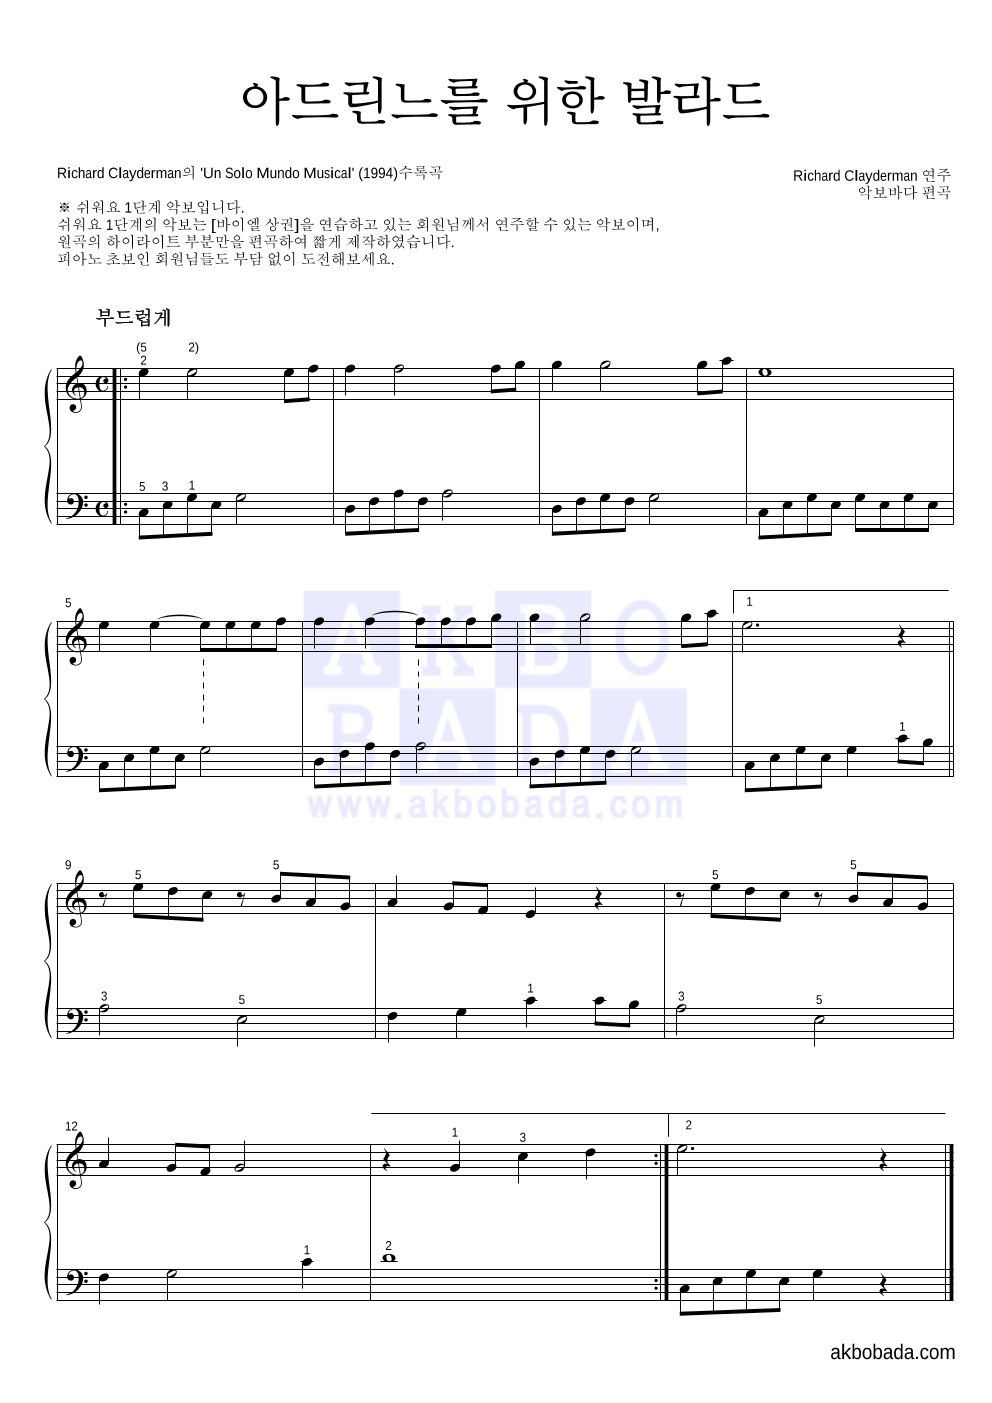 Richard Clayderman  - 아드린느를 위한 발라드 피아노2단-쉬워요 악보 